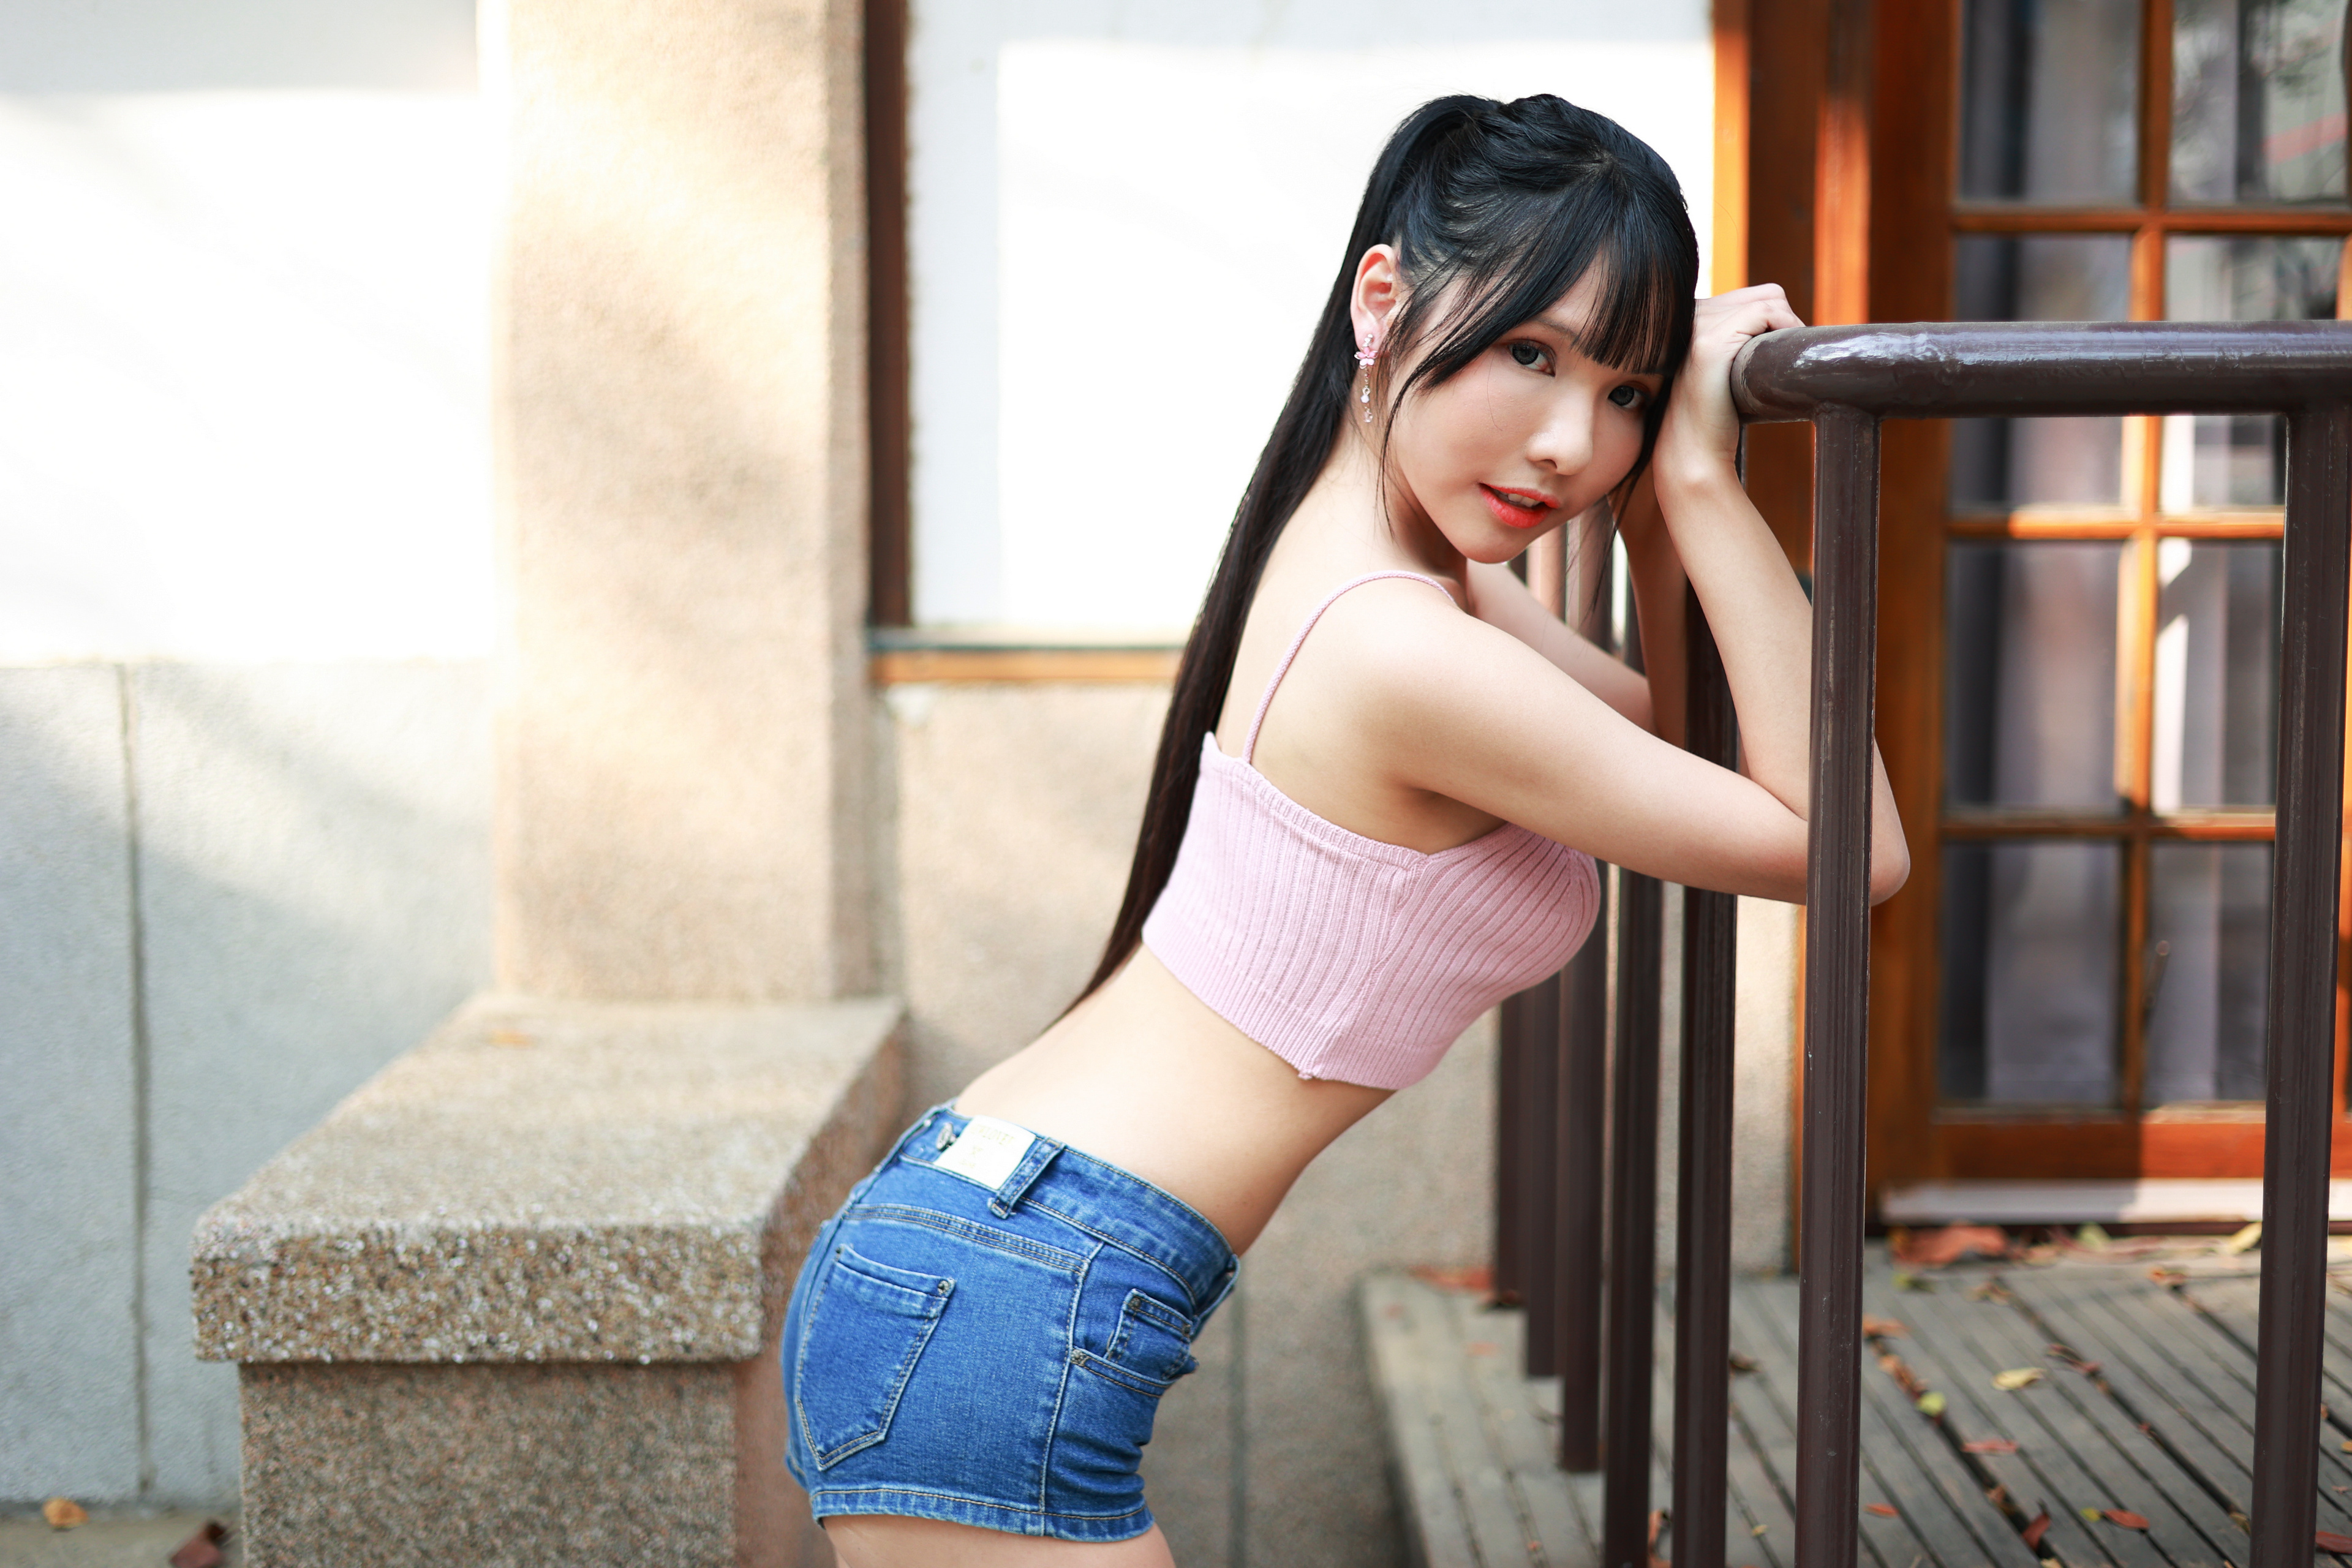 Asian Model Women Long Hair Dark Hair Short Tops Ponytail Railings Leaning Terraces Window Vicky 3840x2560